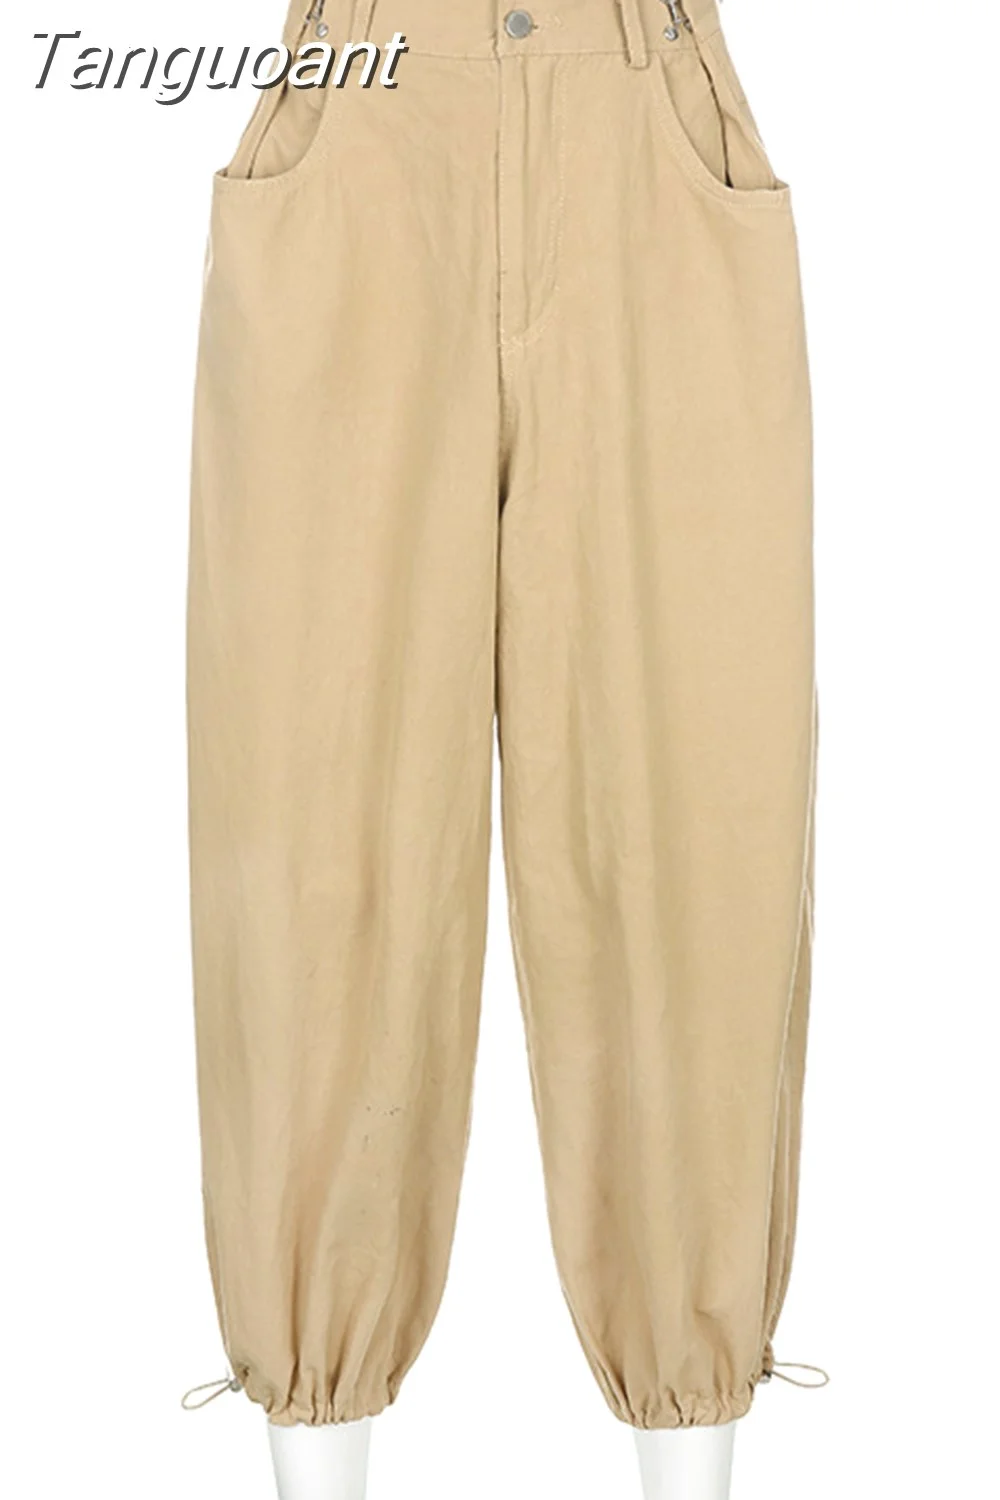 Tanguoant Y2K Fashion Khaki Oversized Cargo Pants Hip Hop Style Loosed Adjustable Waist Drawstring Long Pant Streetwear 90s Autumn